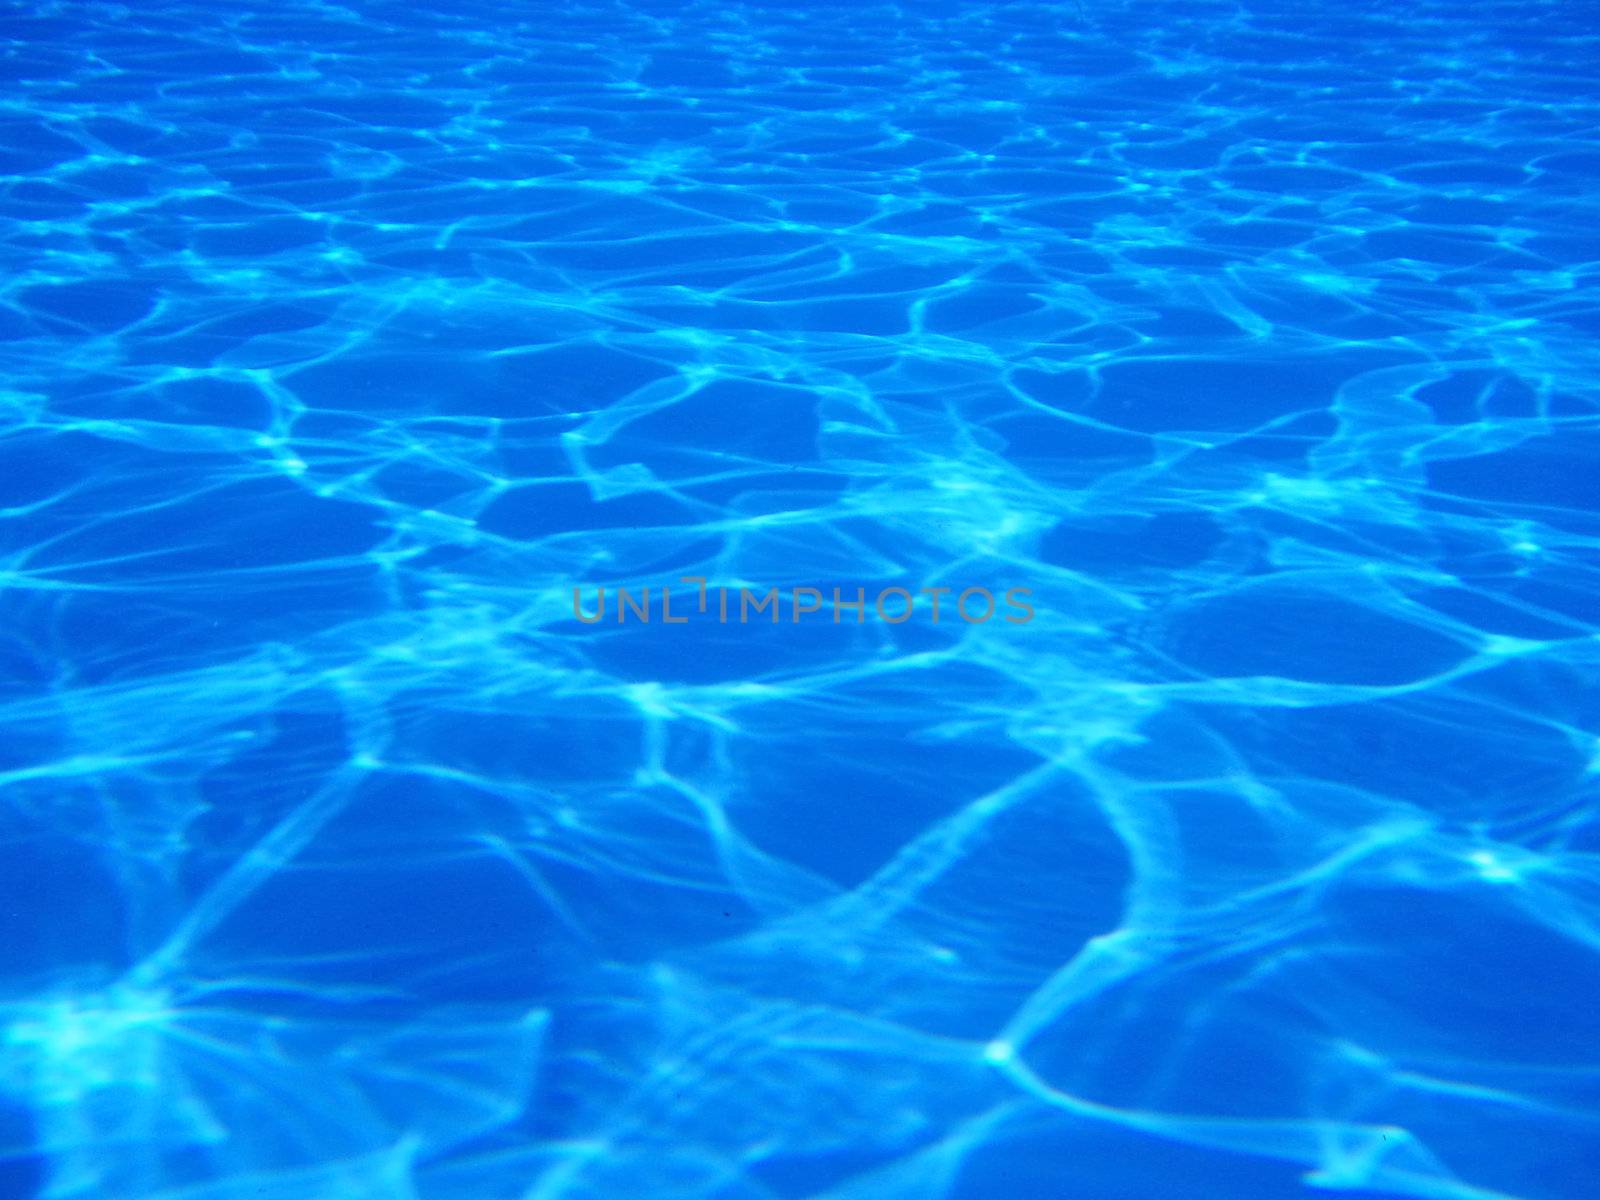 Reflections on bottom of pool by KonArt